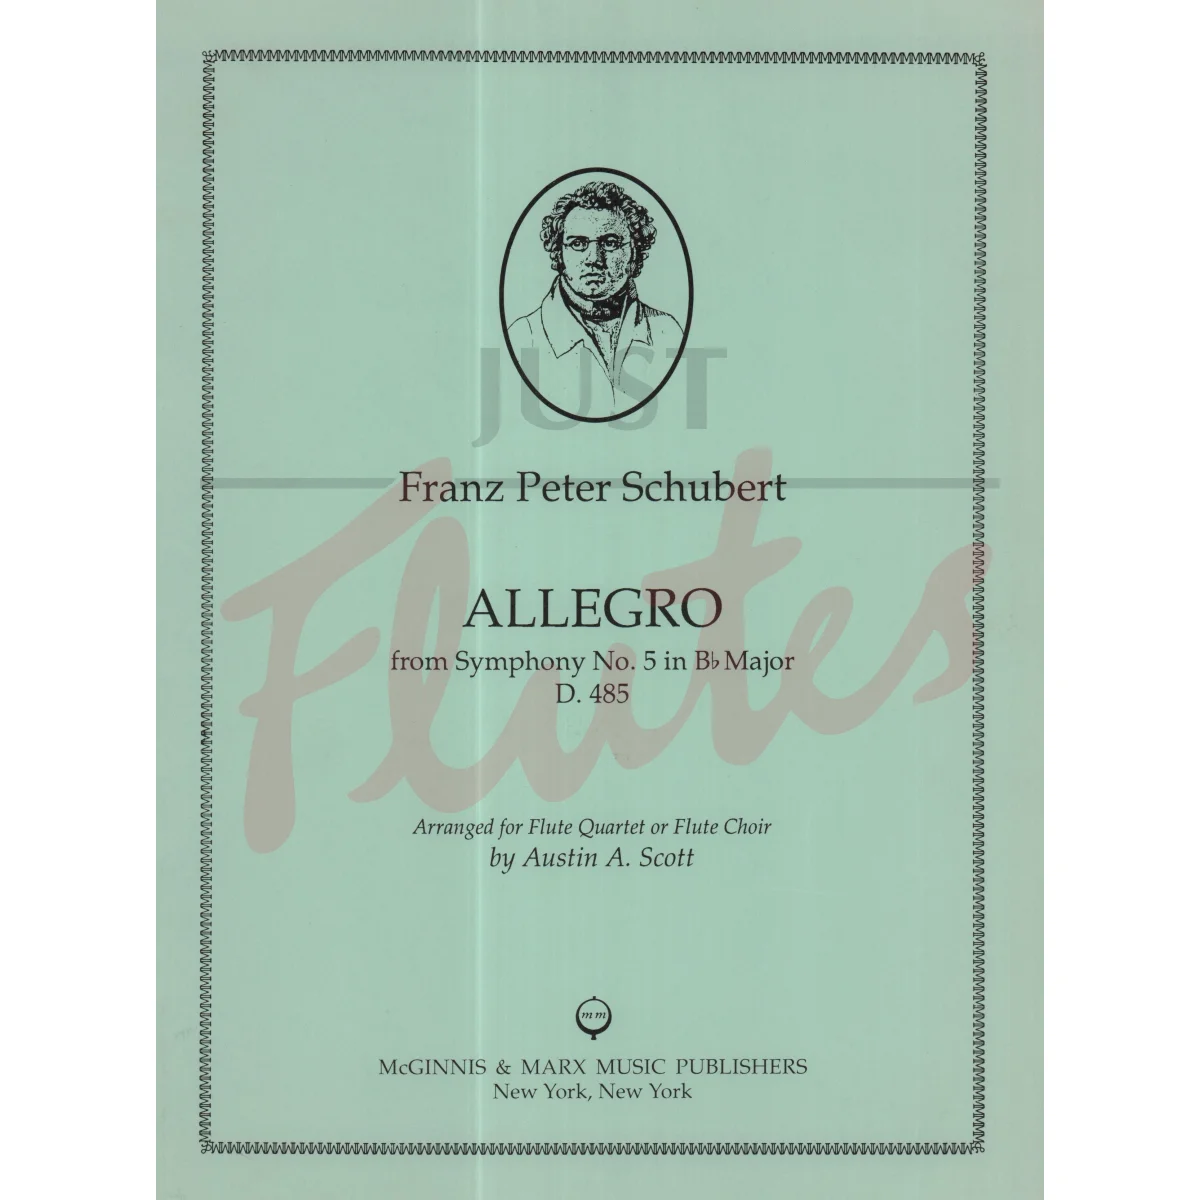 Allegro from Symphony No. 5 in Bb major for Flute Quartet or Flute Choir